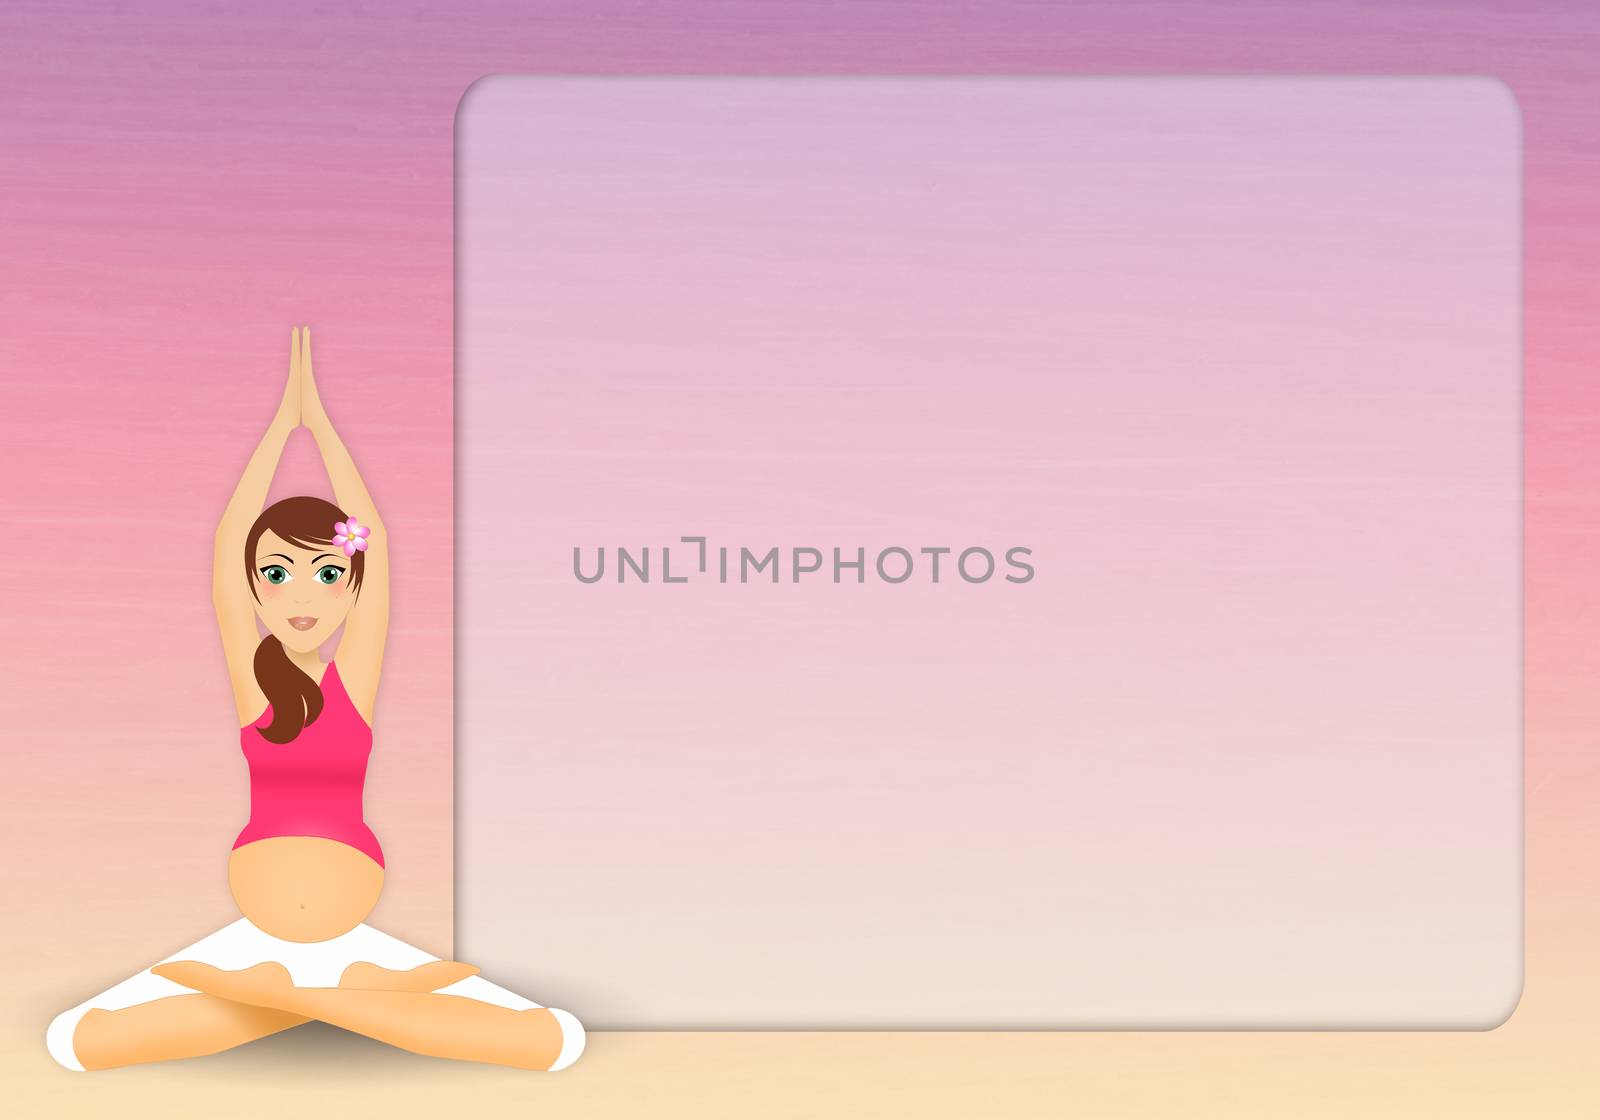 illustration of Pregnant woman in yoga meditation